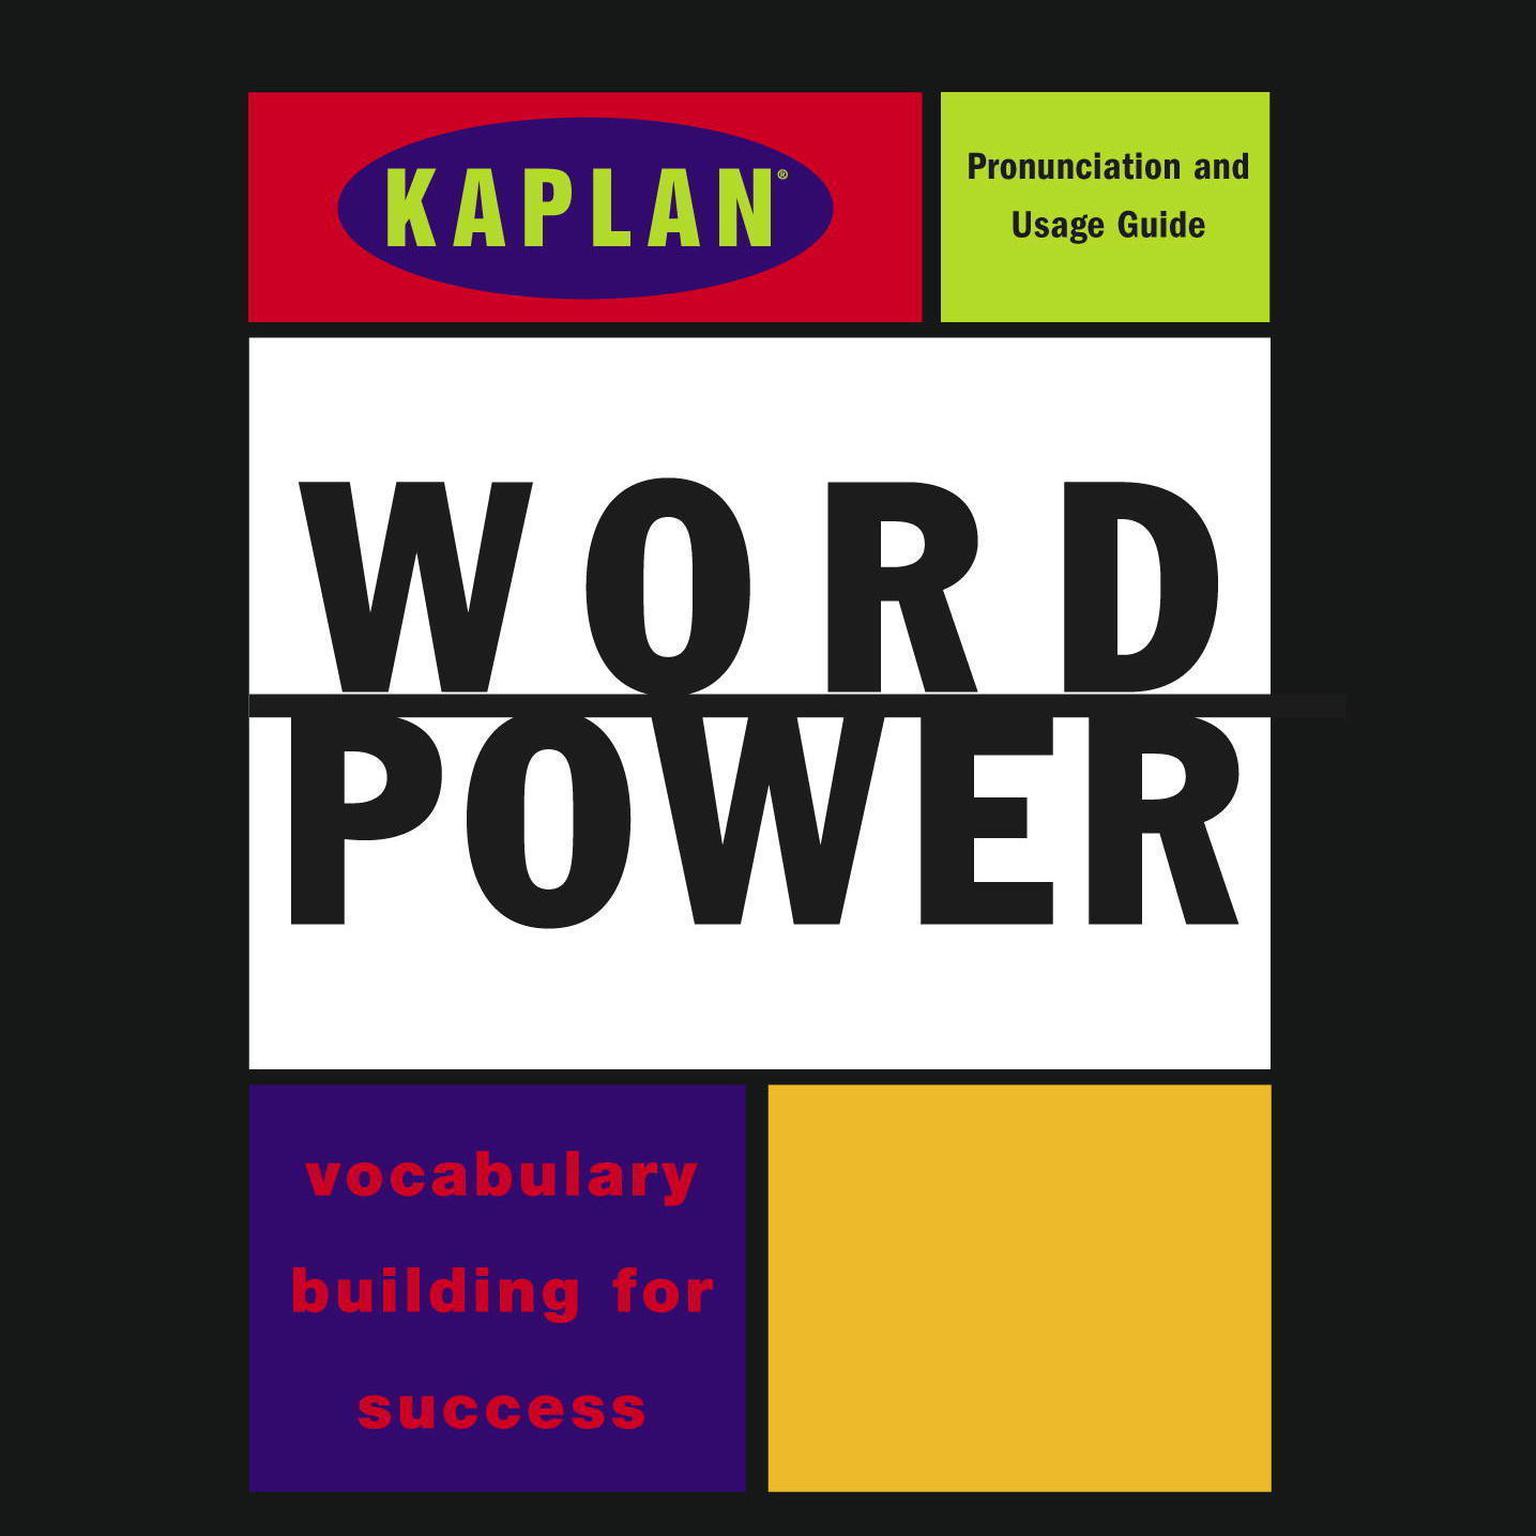 Kaplan Word Power (Abridged): Vocabulary Building for Success Audiobook, by Kaplan